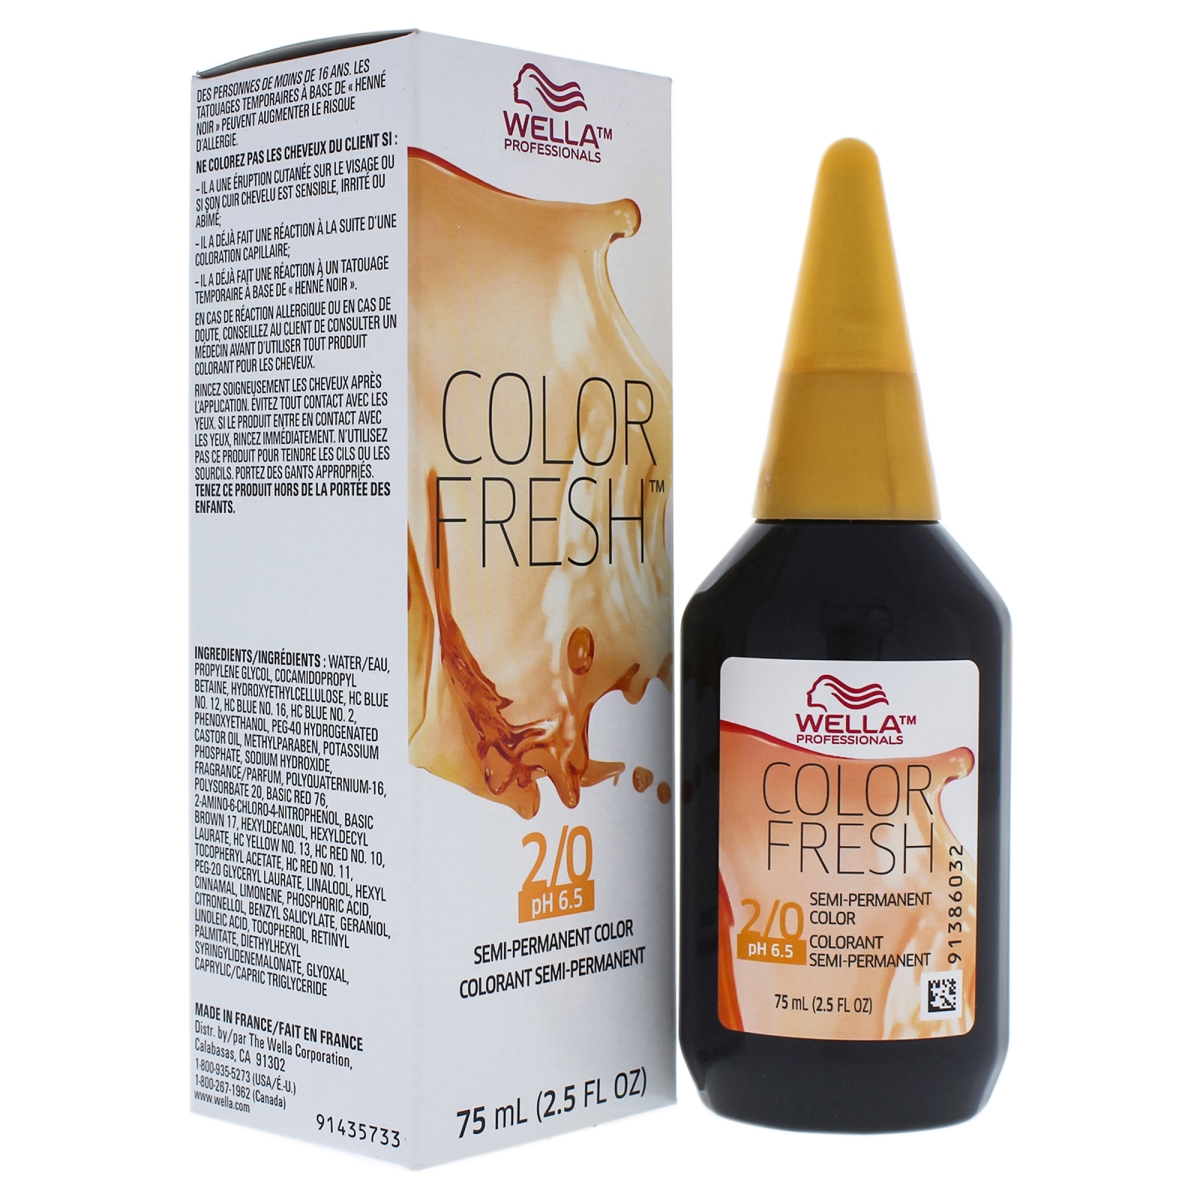 I0086887 Color Fresh Semi & Permanent Hair Color For Unisex - 2 0 Darkest Brown & Natural - 2.5 Oz